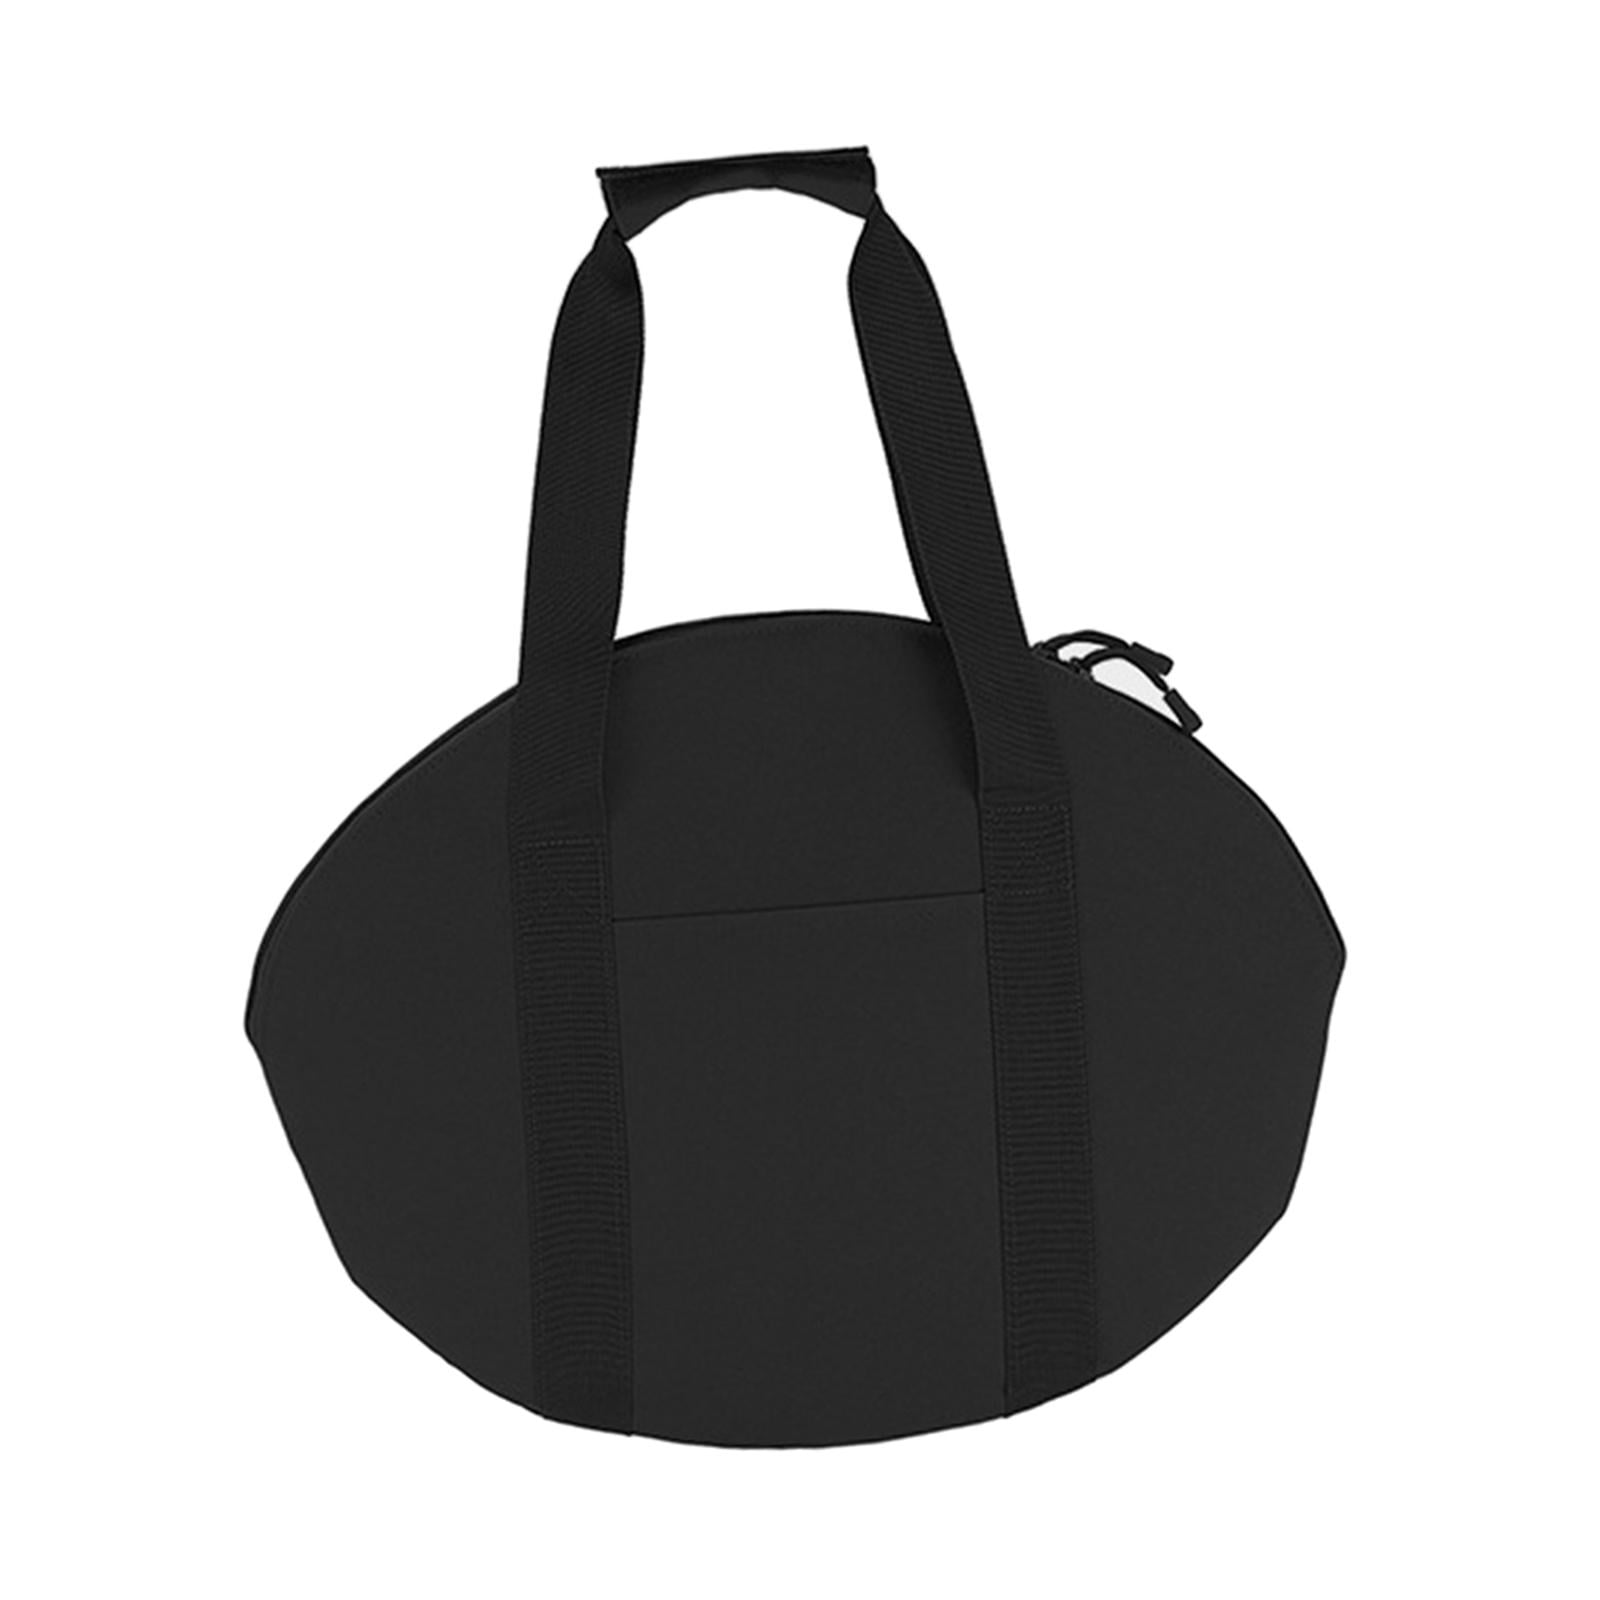 Suncast Black Amenity Housekeeping Accessory Bag HKCBAG01D - The Home Depot